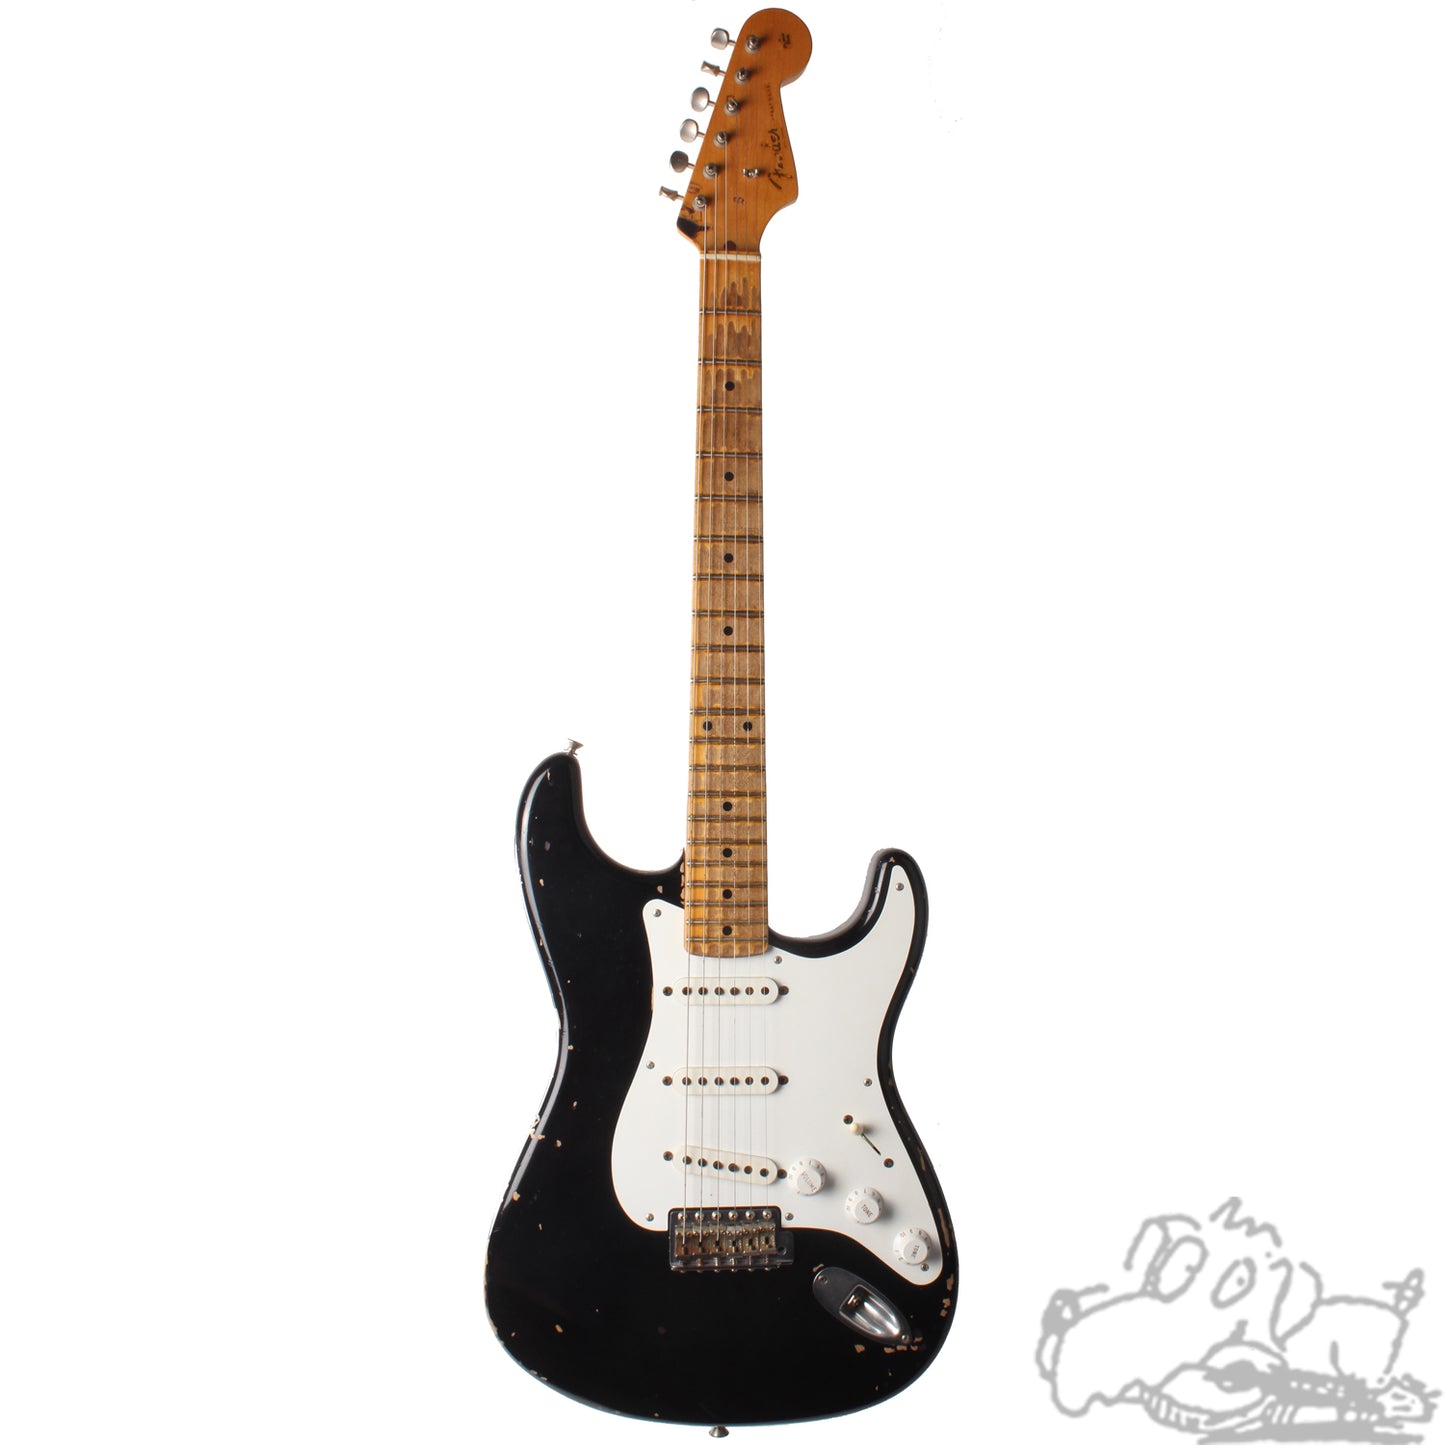 2006 Fender Custom Shop Stratocaster "Blackie" Limited Edition